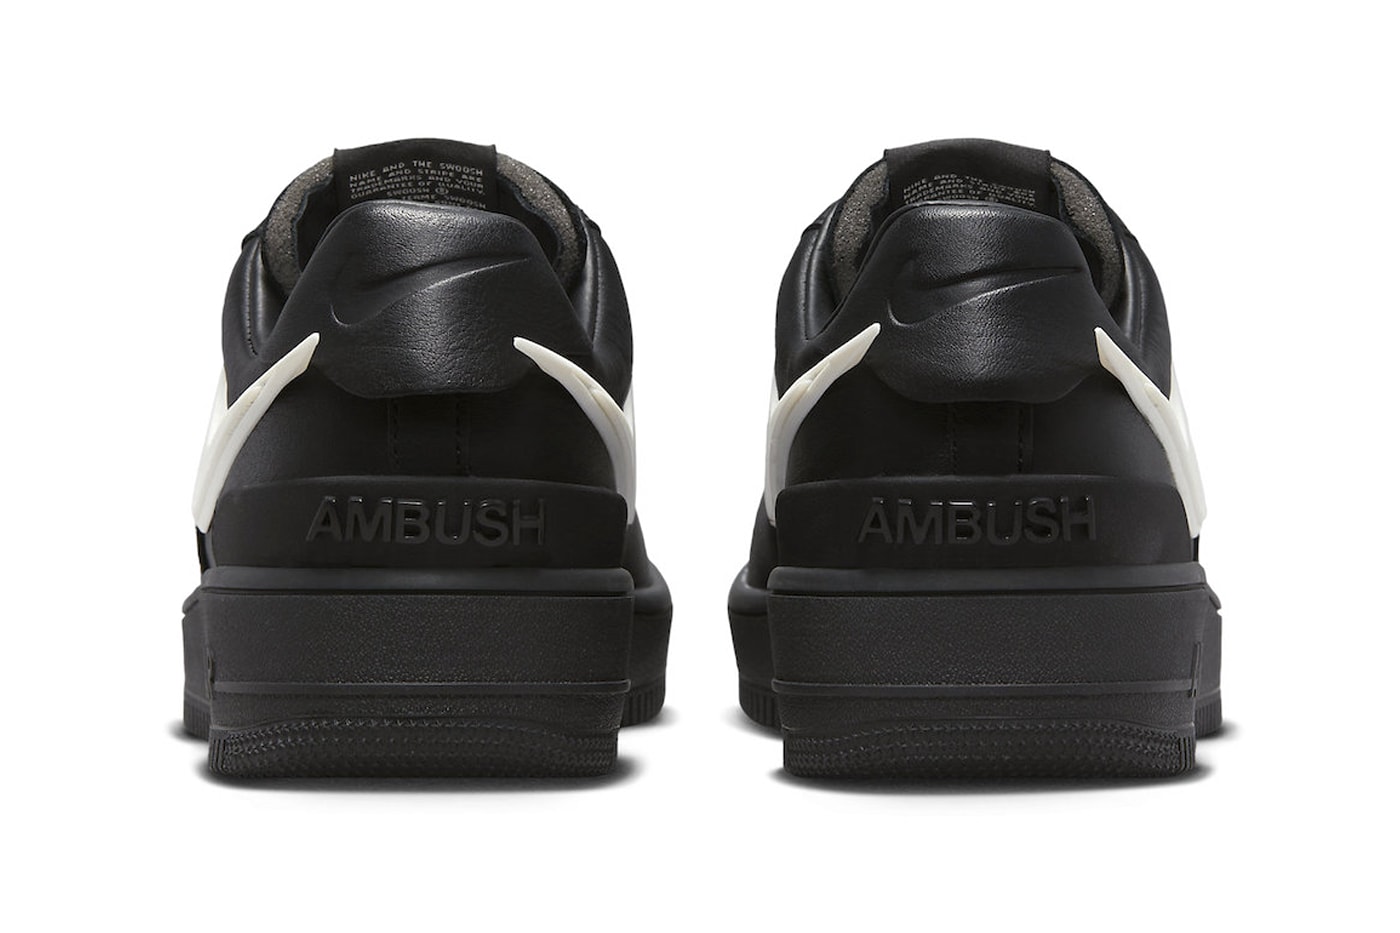 AMBUSH x Nike Air Force 1 Low Release Date